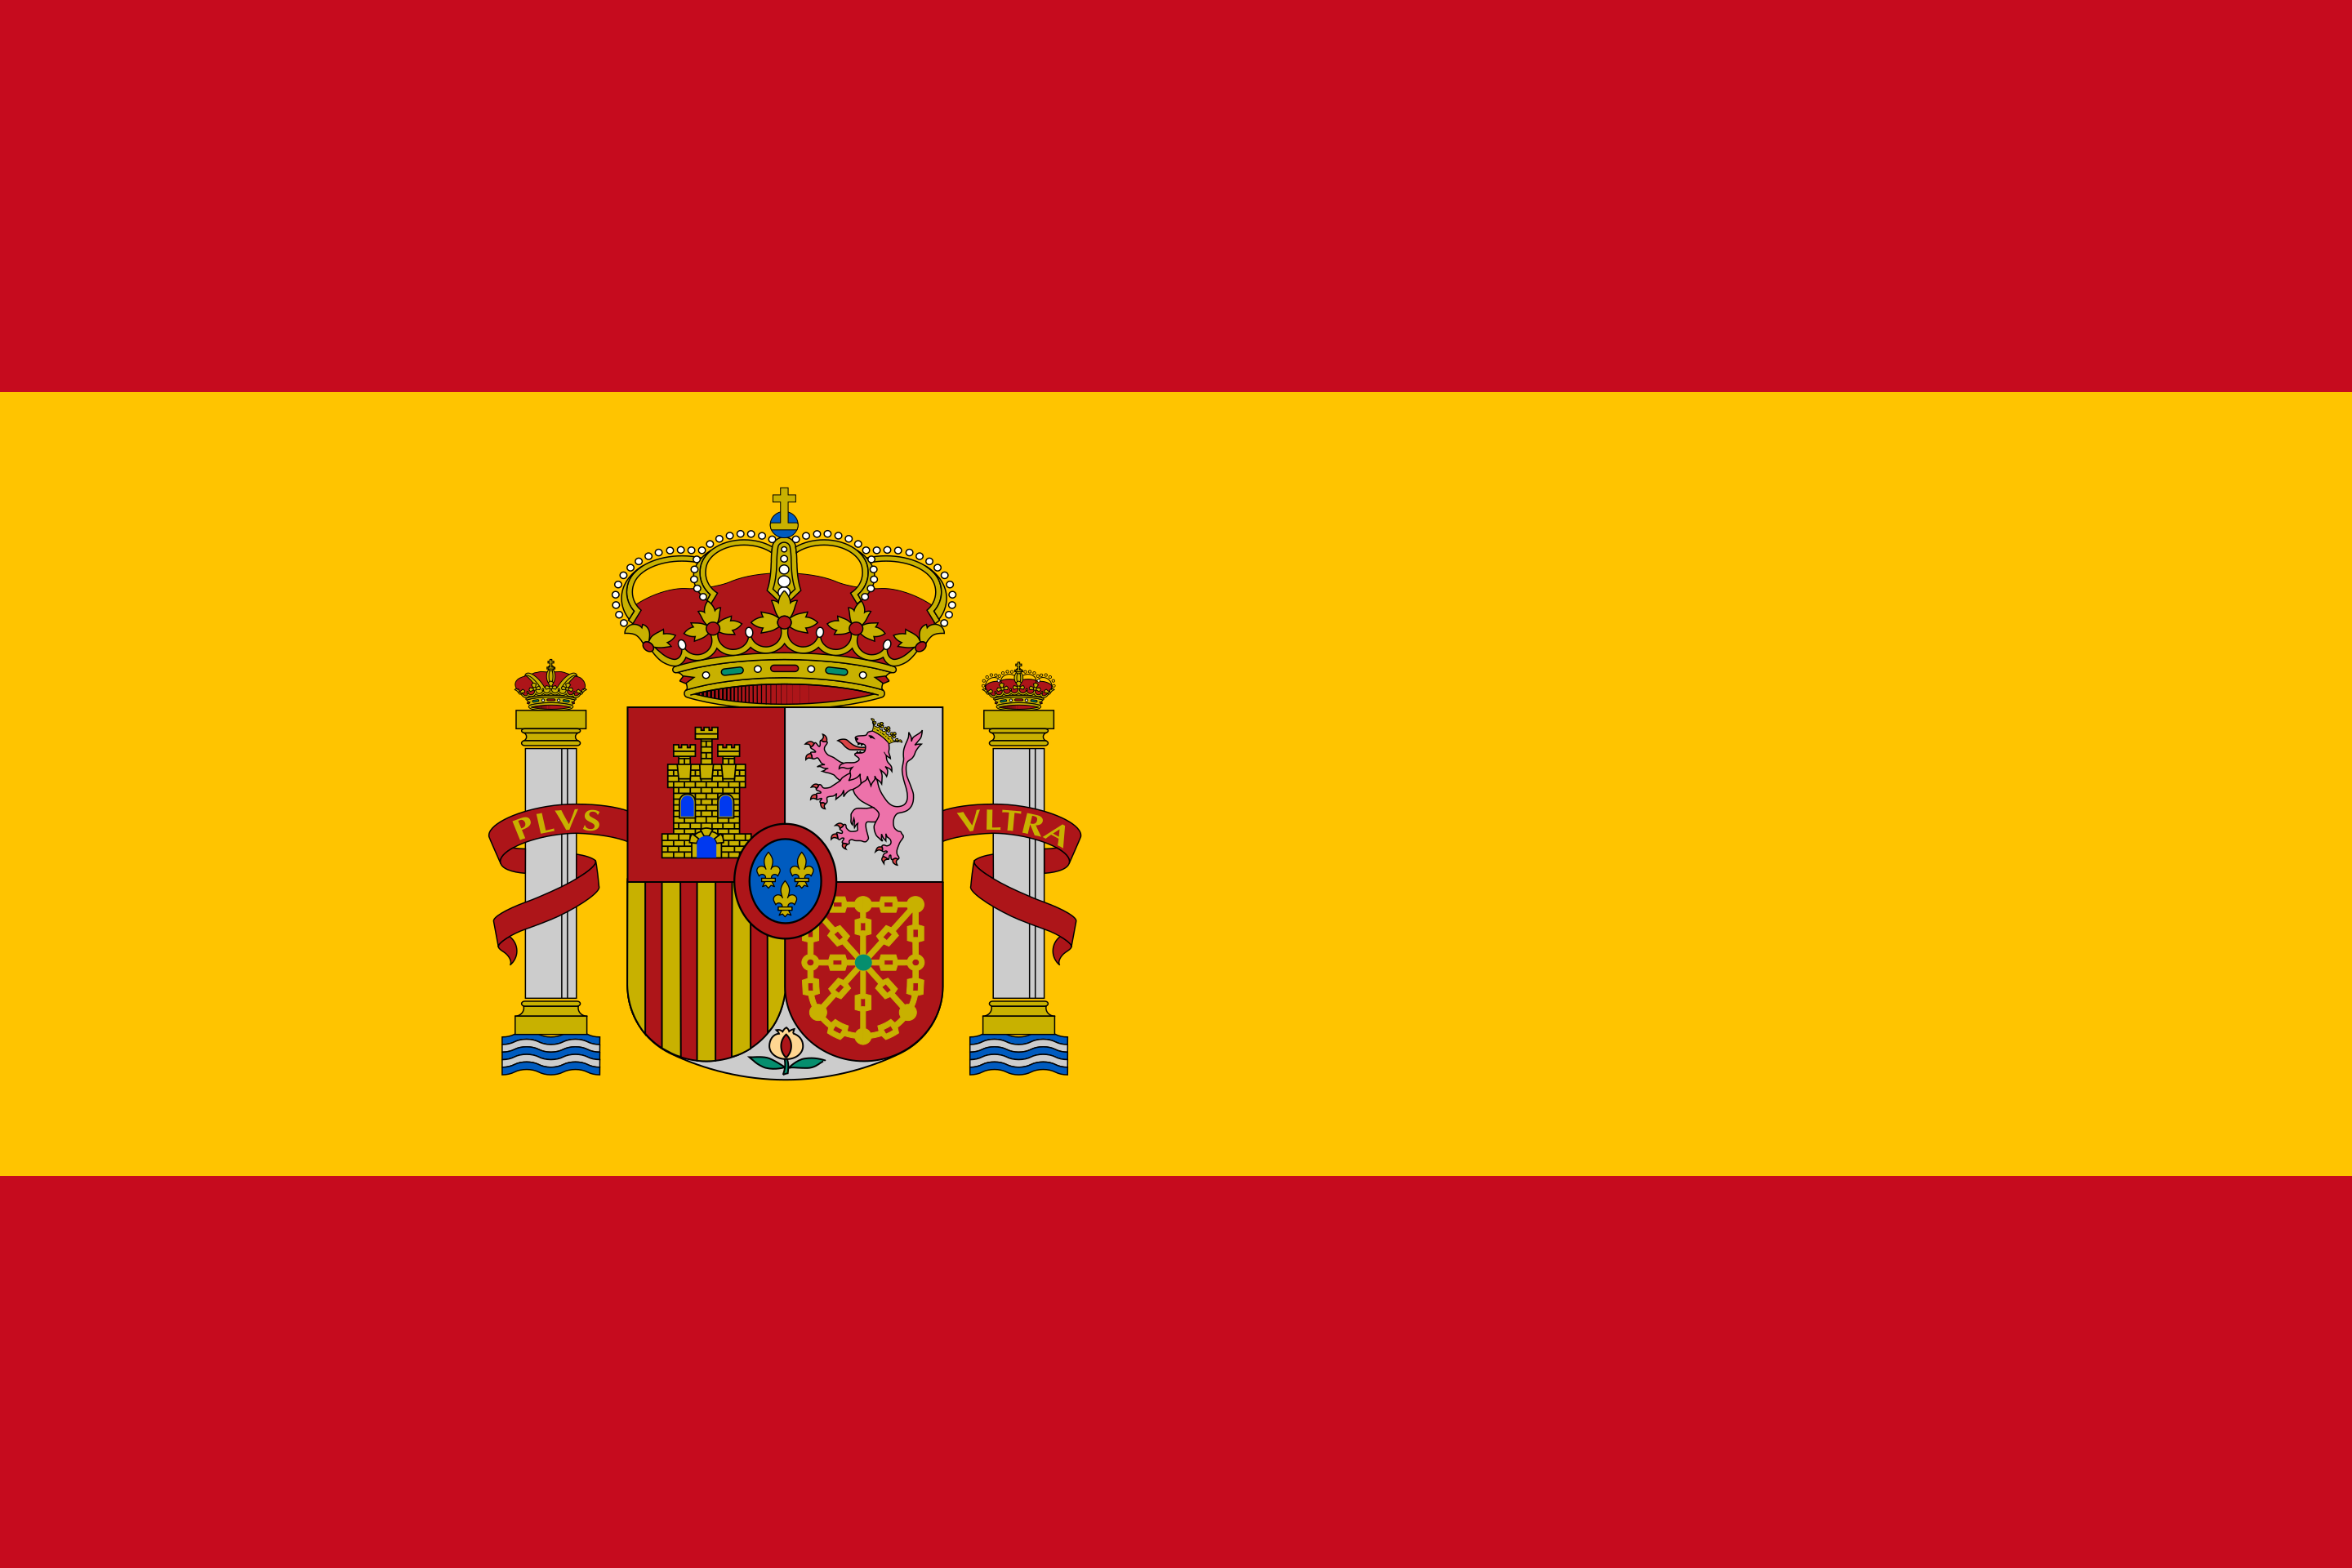 Spanish speaker